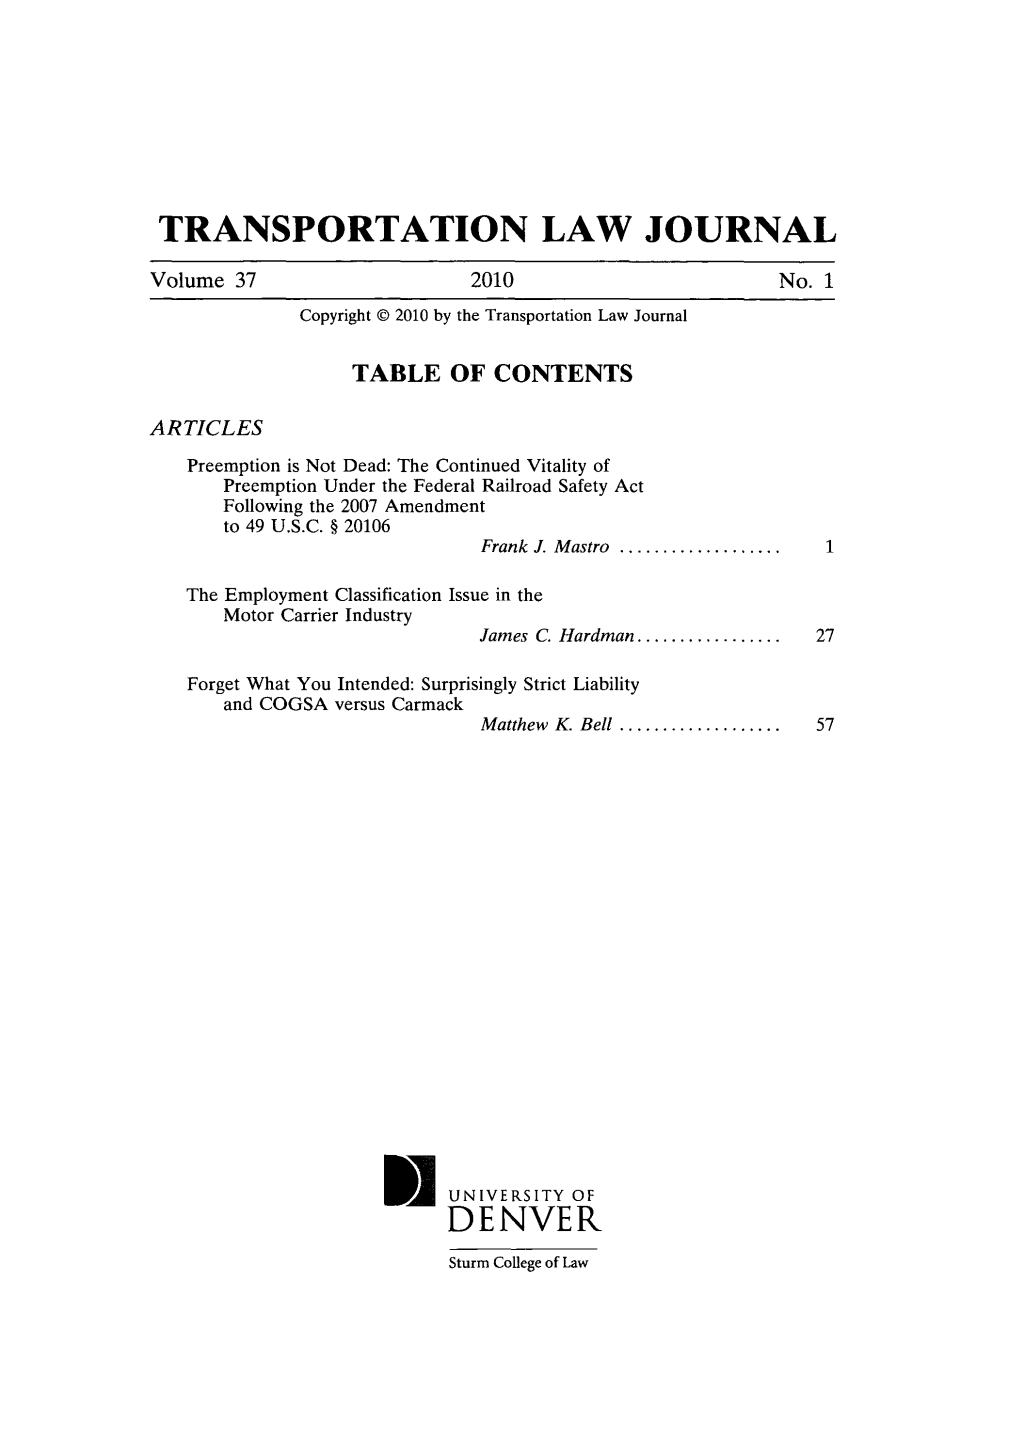 TRANSPORTATION LAW JOURNAL Volume 37 2010 No